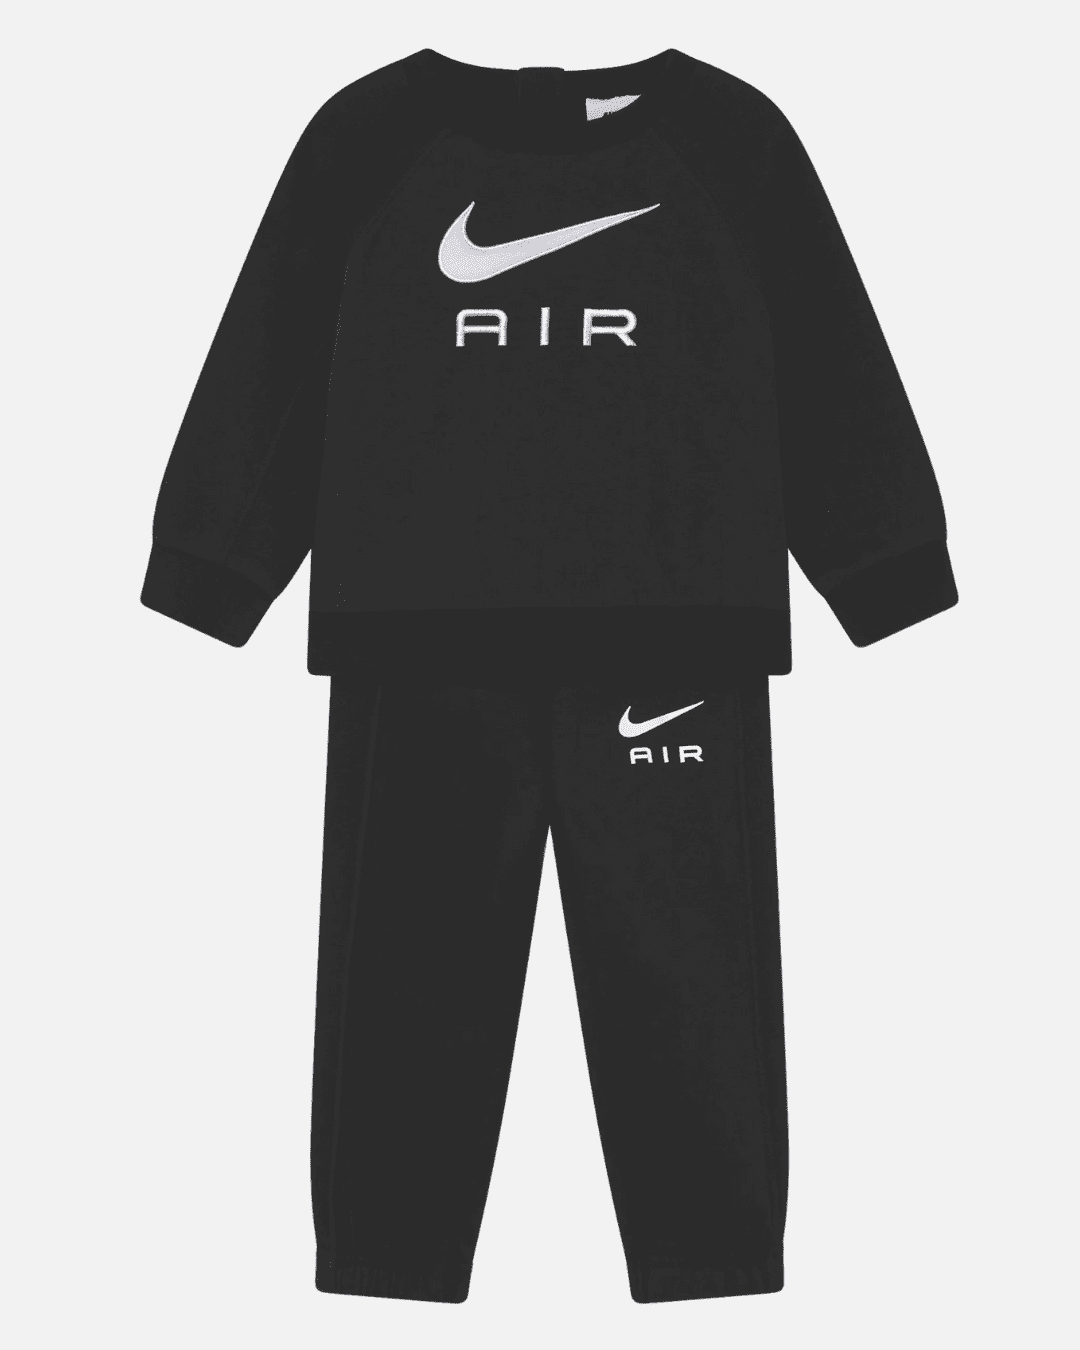 Ensemble Nike Air Crew Bébé - Noir